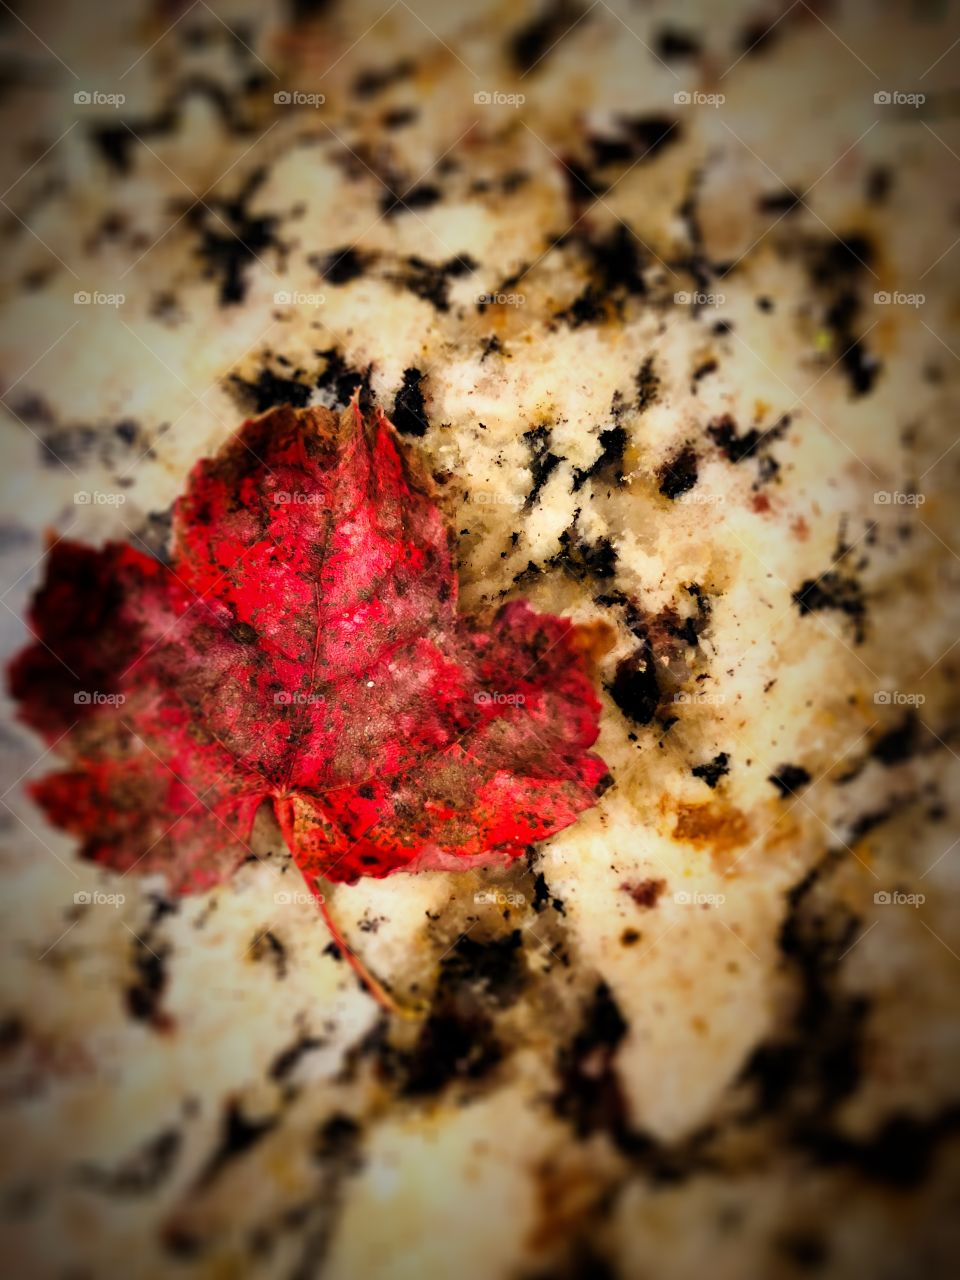 Fall leaf 